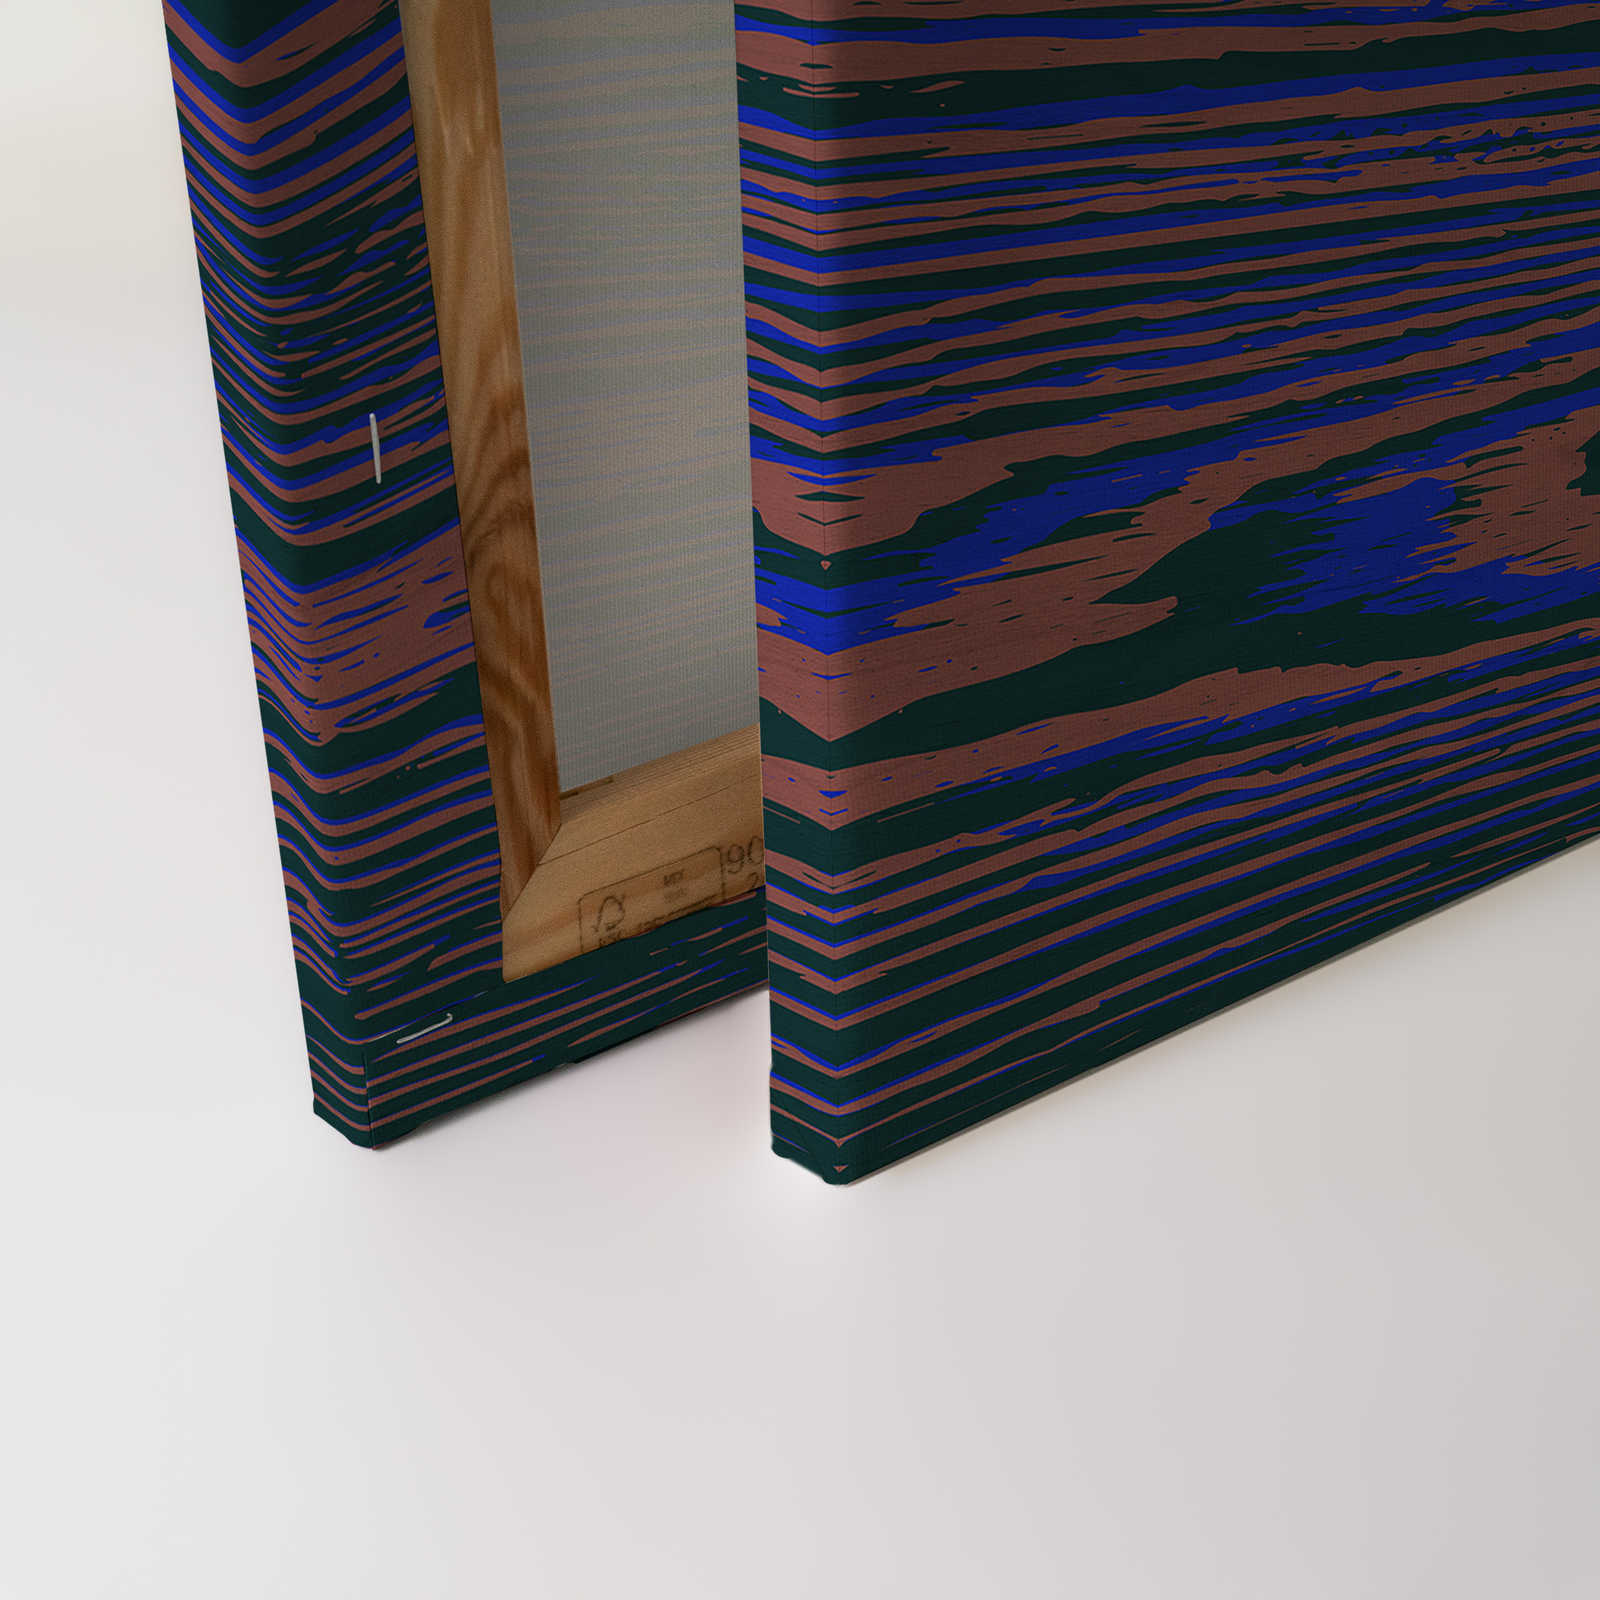             Kontiki 3 - Leinwandbild Neonfarbene Holzmaserung, Lila & Schwarz – 1,20 m x 0,80 m
        